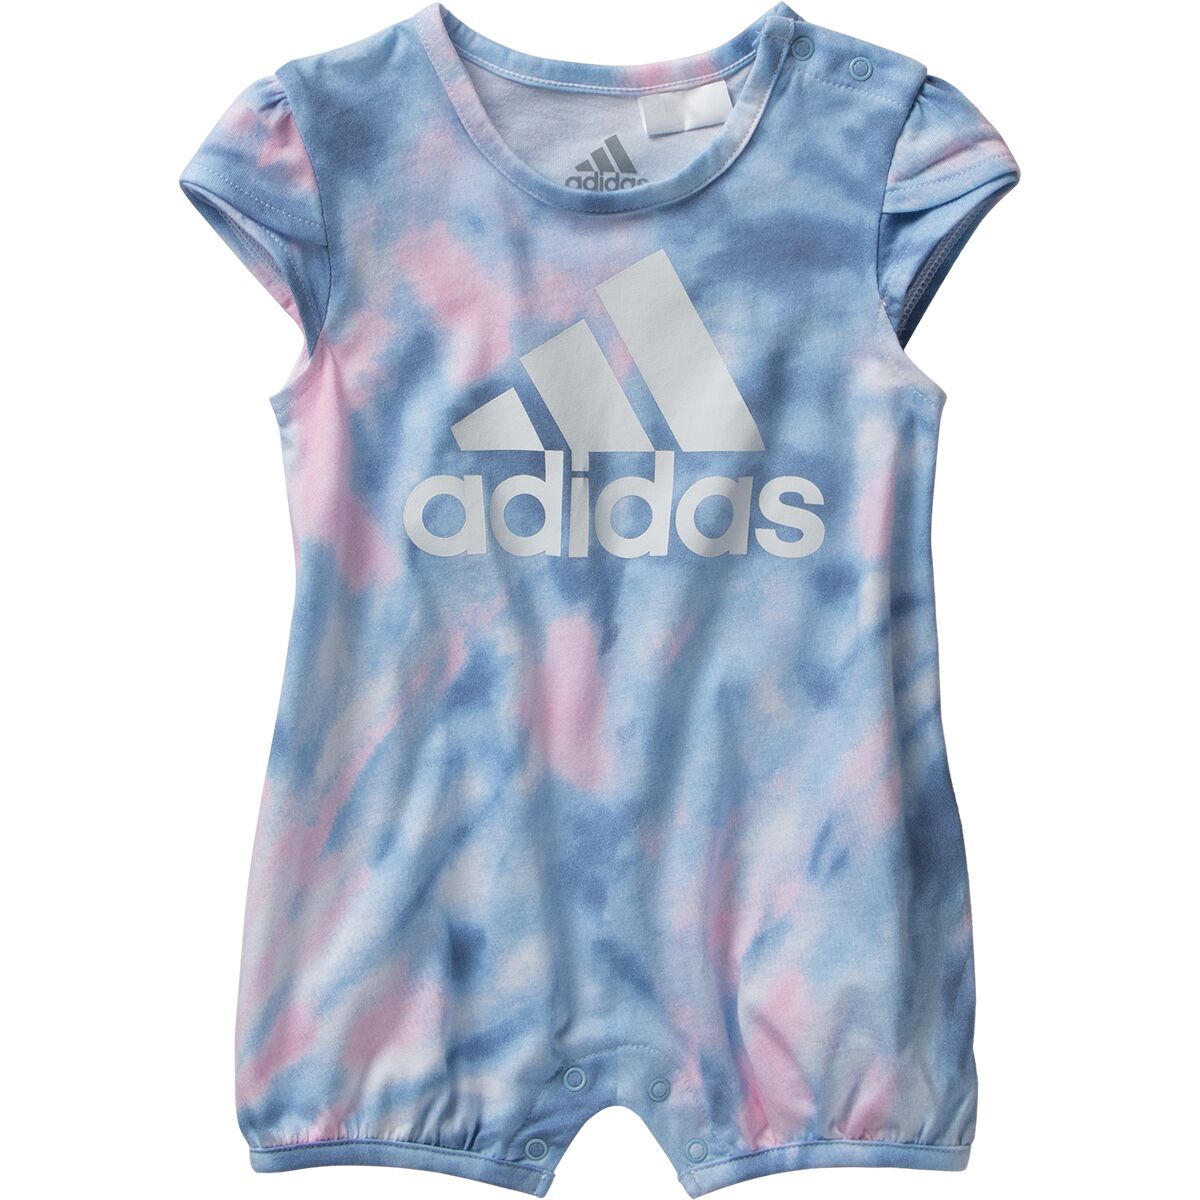 Adidas Printed Shortie Romper - Infant Girls'